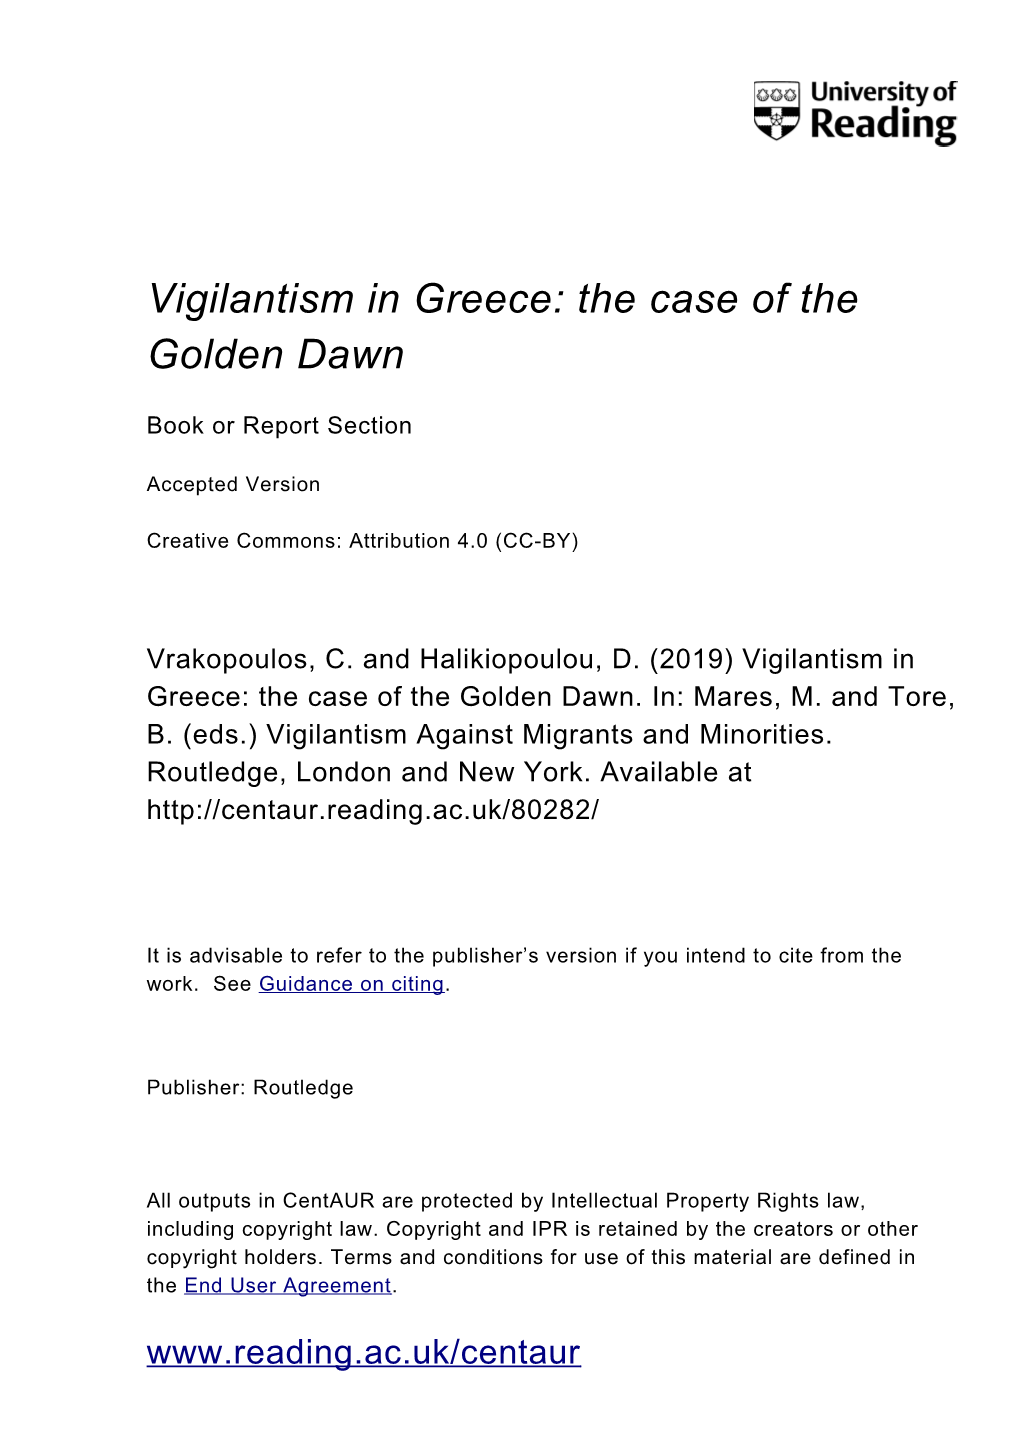 Vigilantism in Greece: the Case of the Golden Dawn